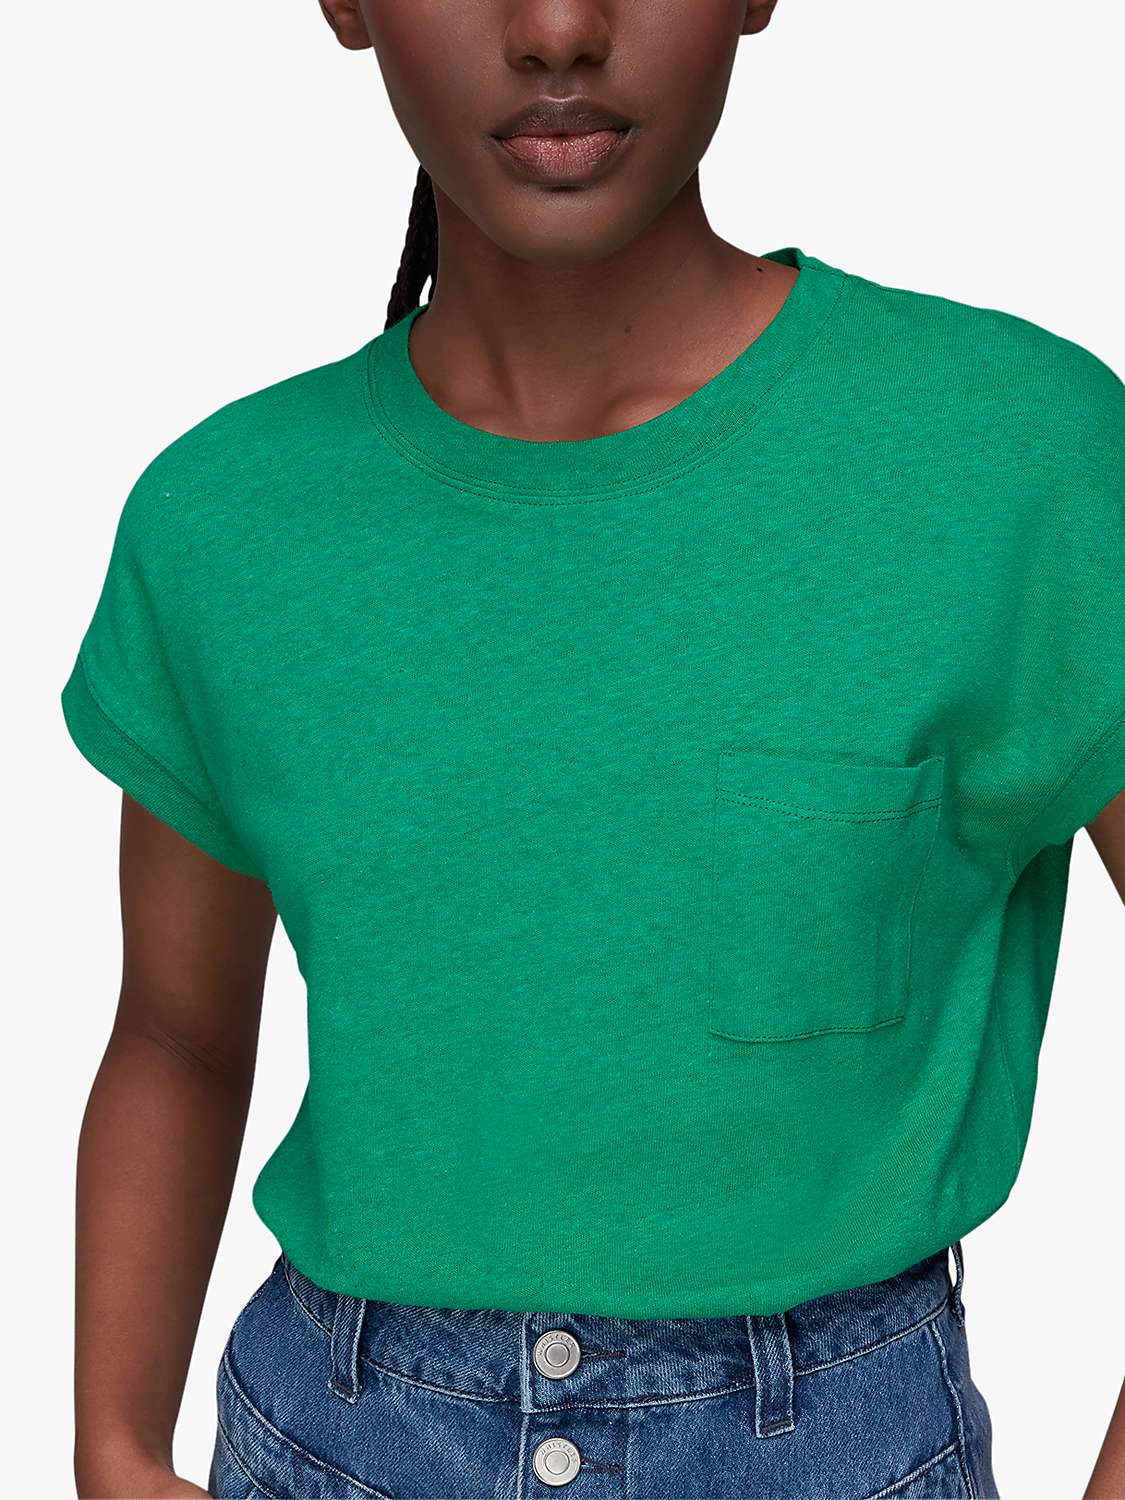 Buy Whistles Ember Linen Blend Pocket T-Shirt Online at johnlewis.com